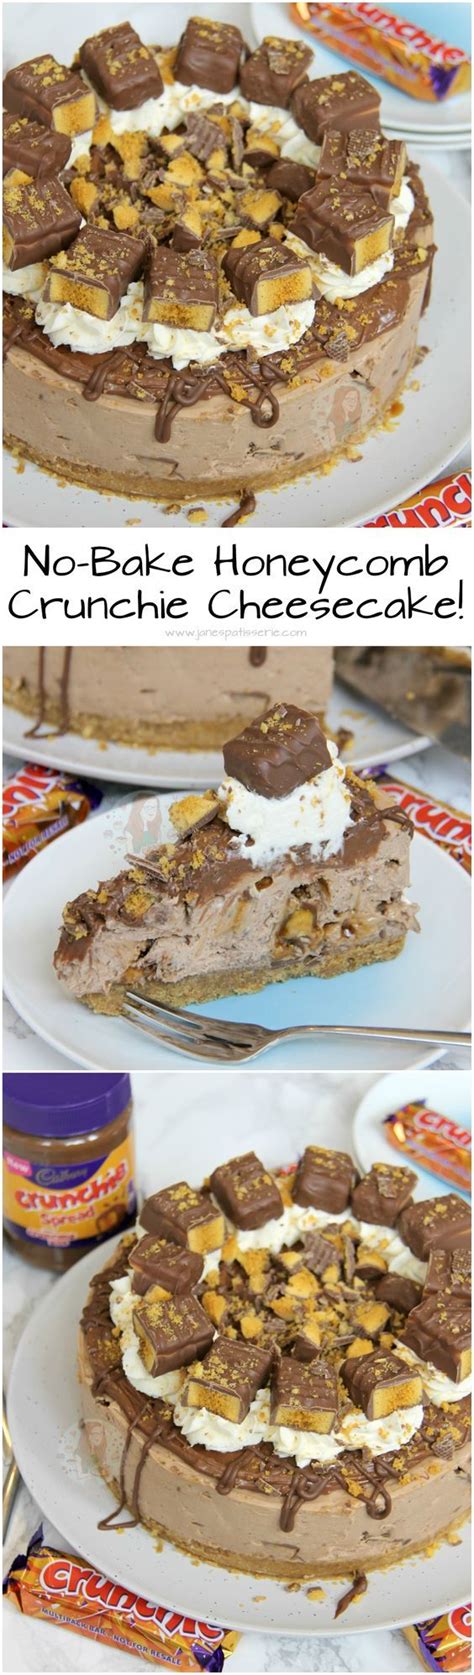 no bake honeycomb crunchie cheesecake ️ a creamy chocolatey sweet